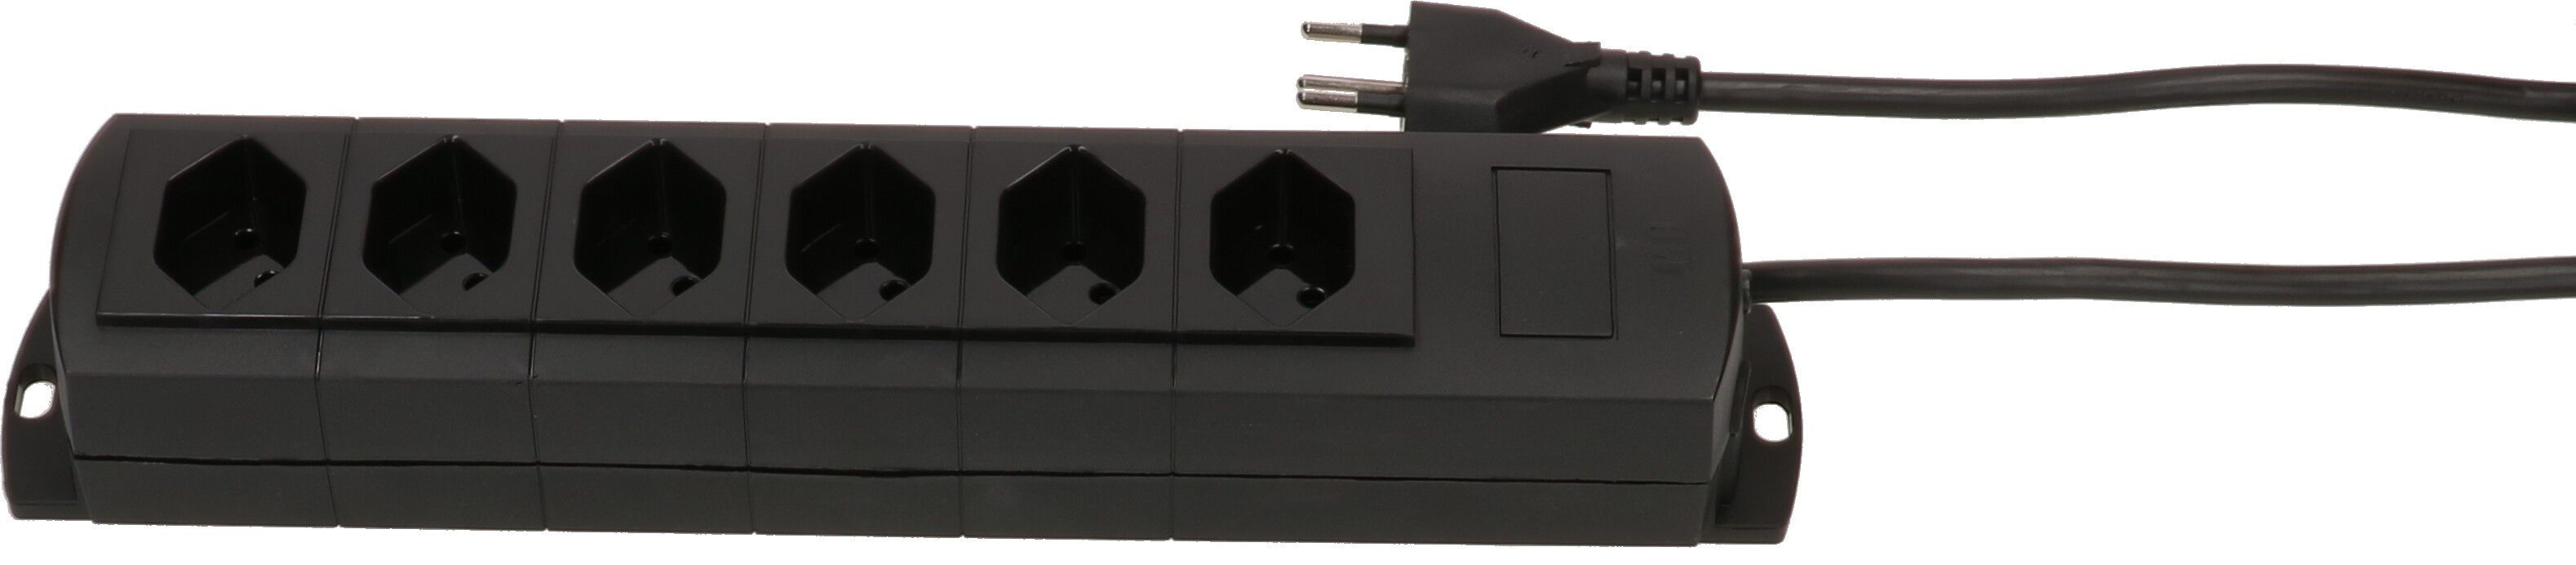 BIT bloc multiprise noir 1x HDMI - MAX HAURI AG